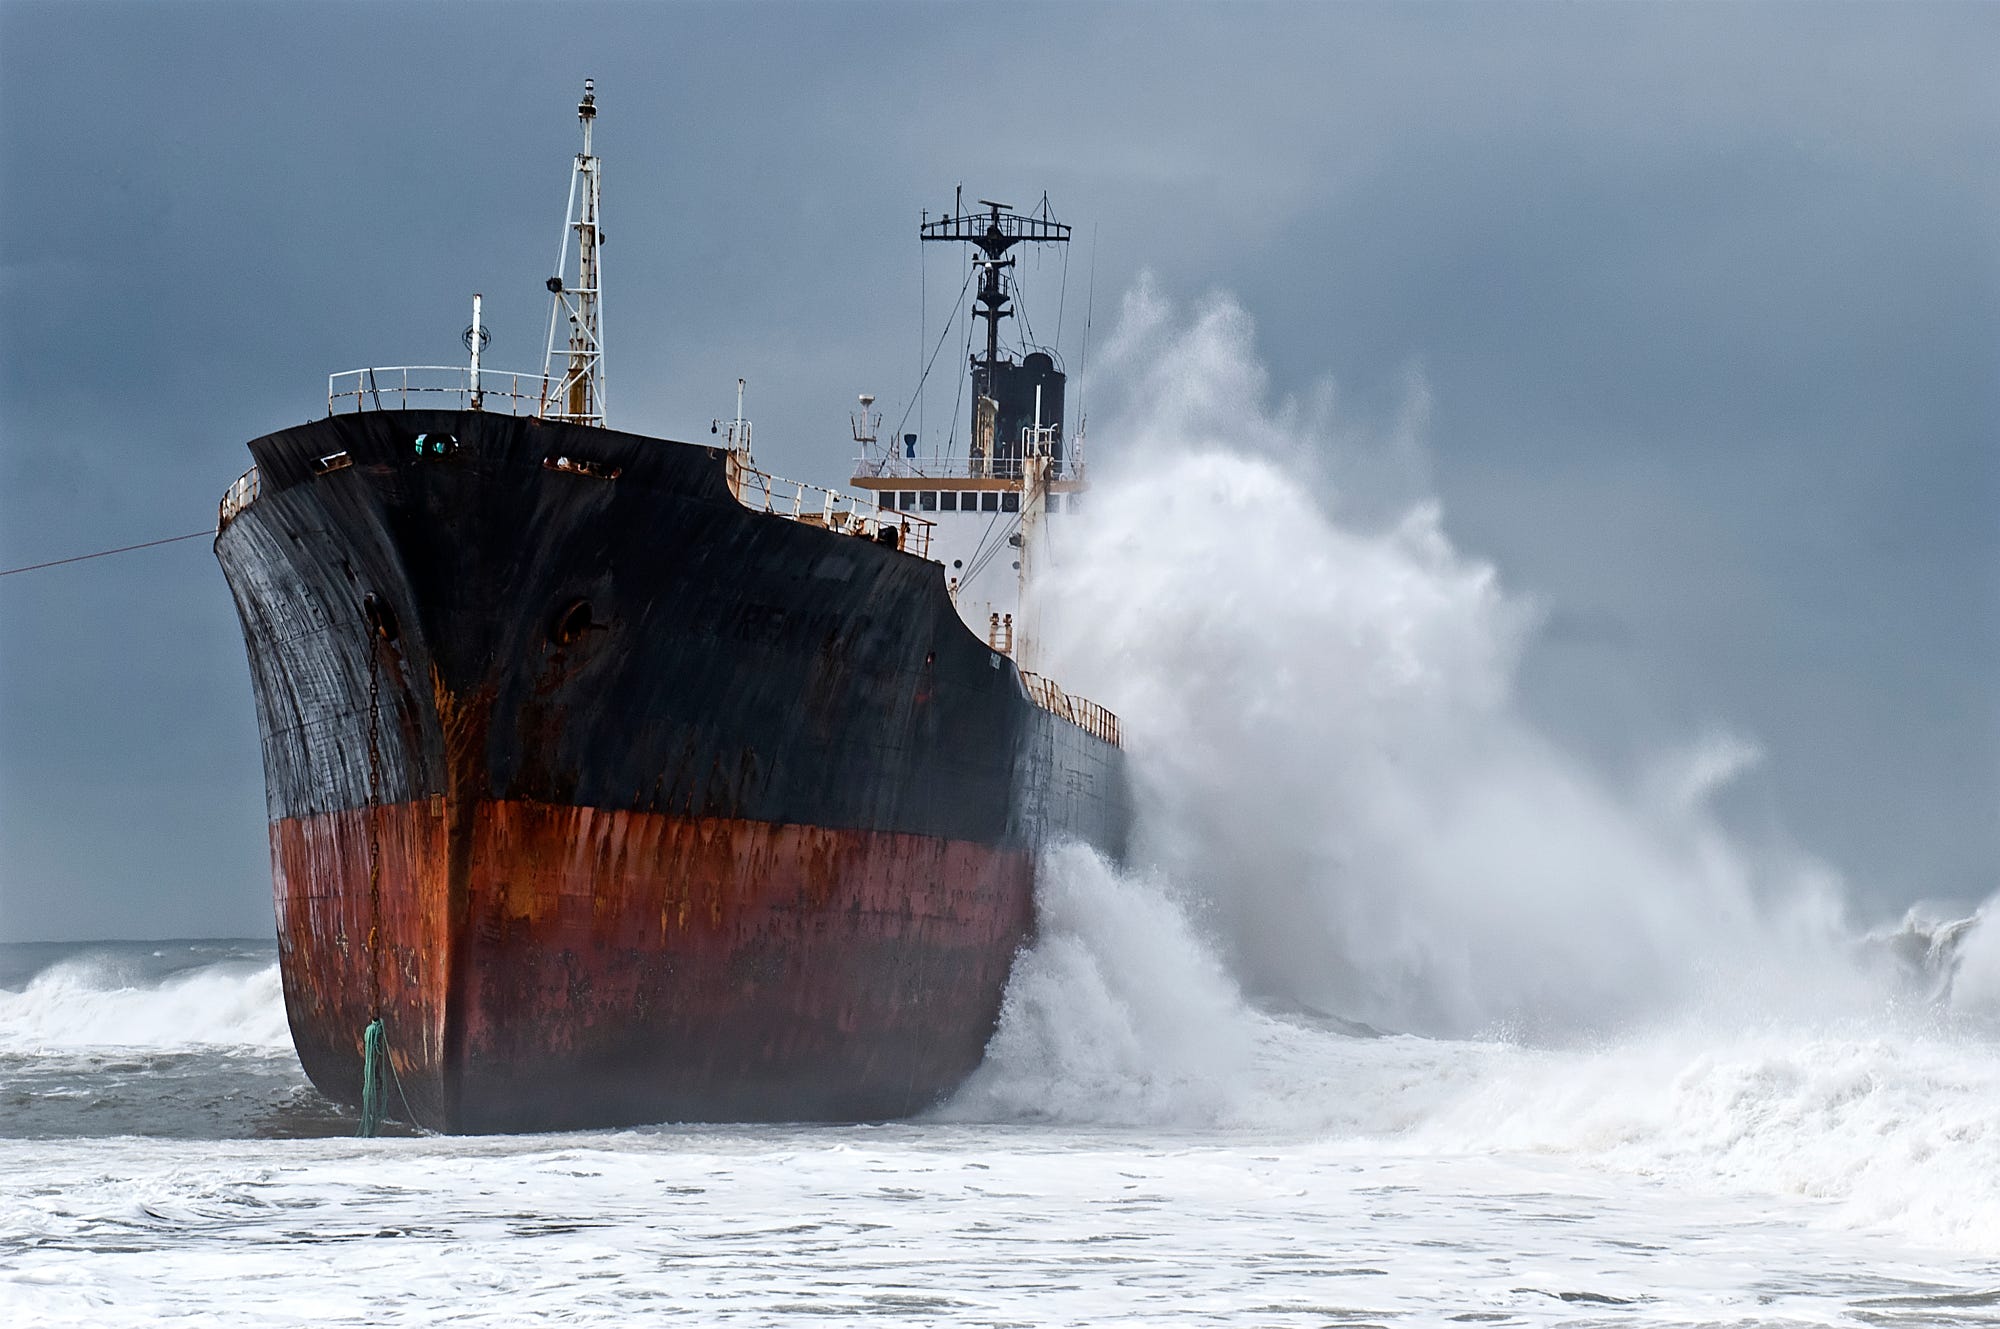 General 2000x1329 ship waves atlantic ocean rain storm splashes sea blue red gray